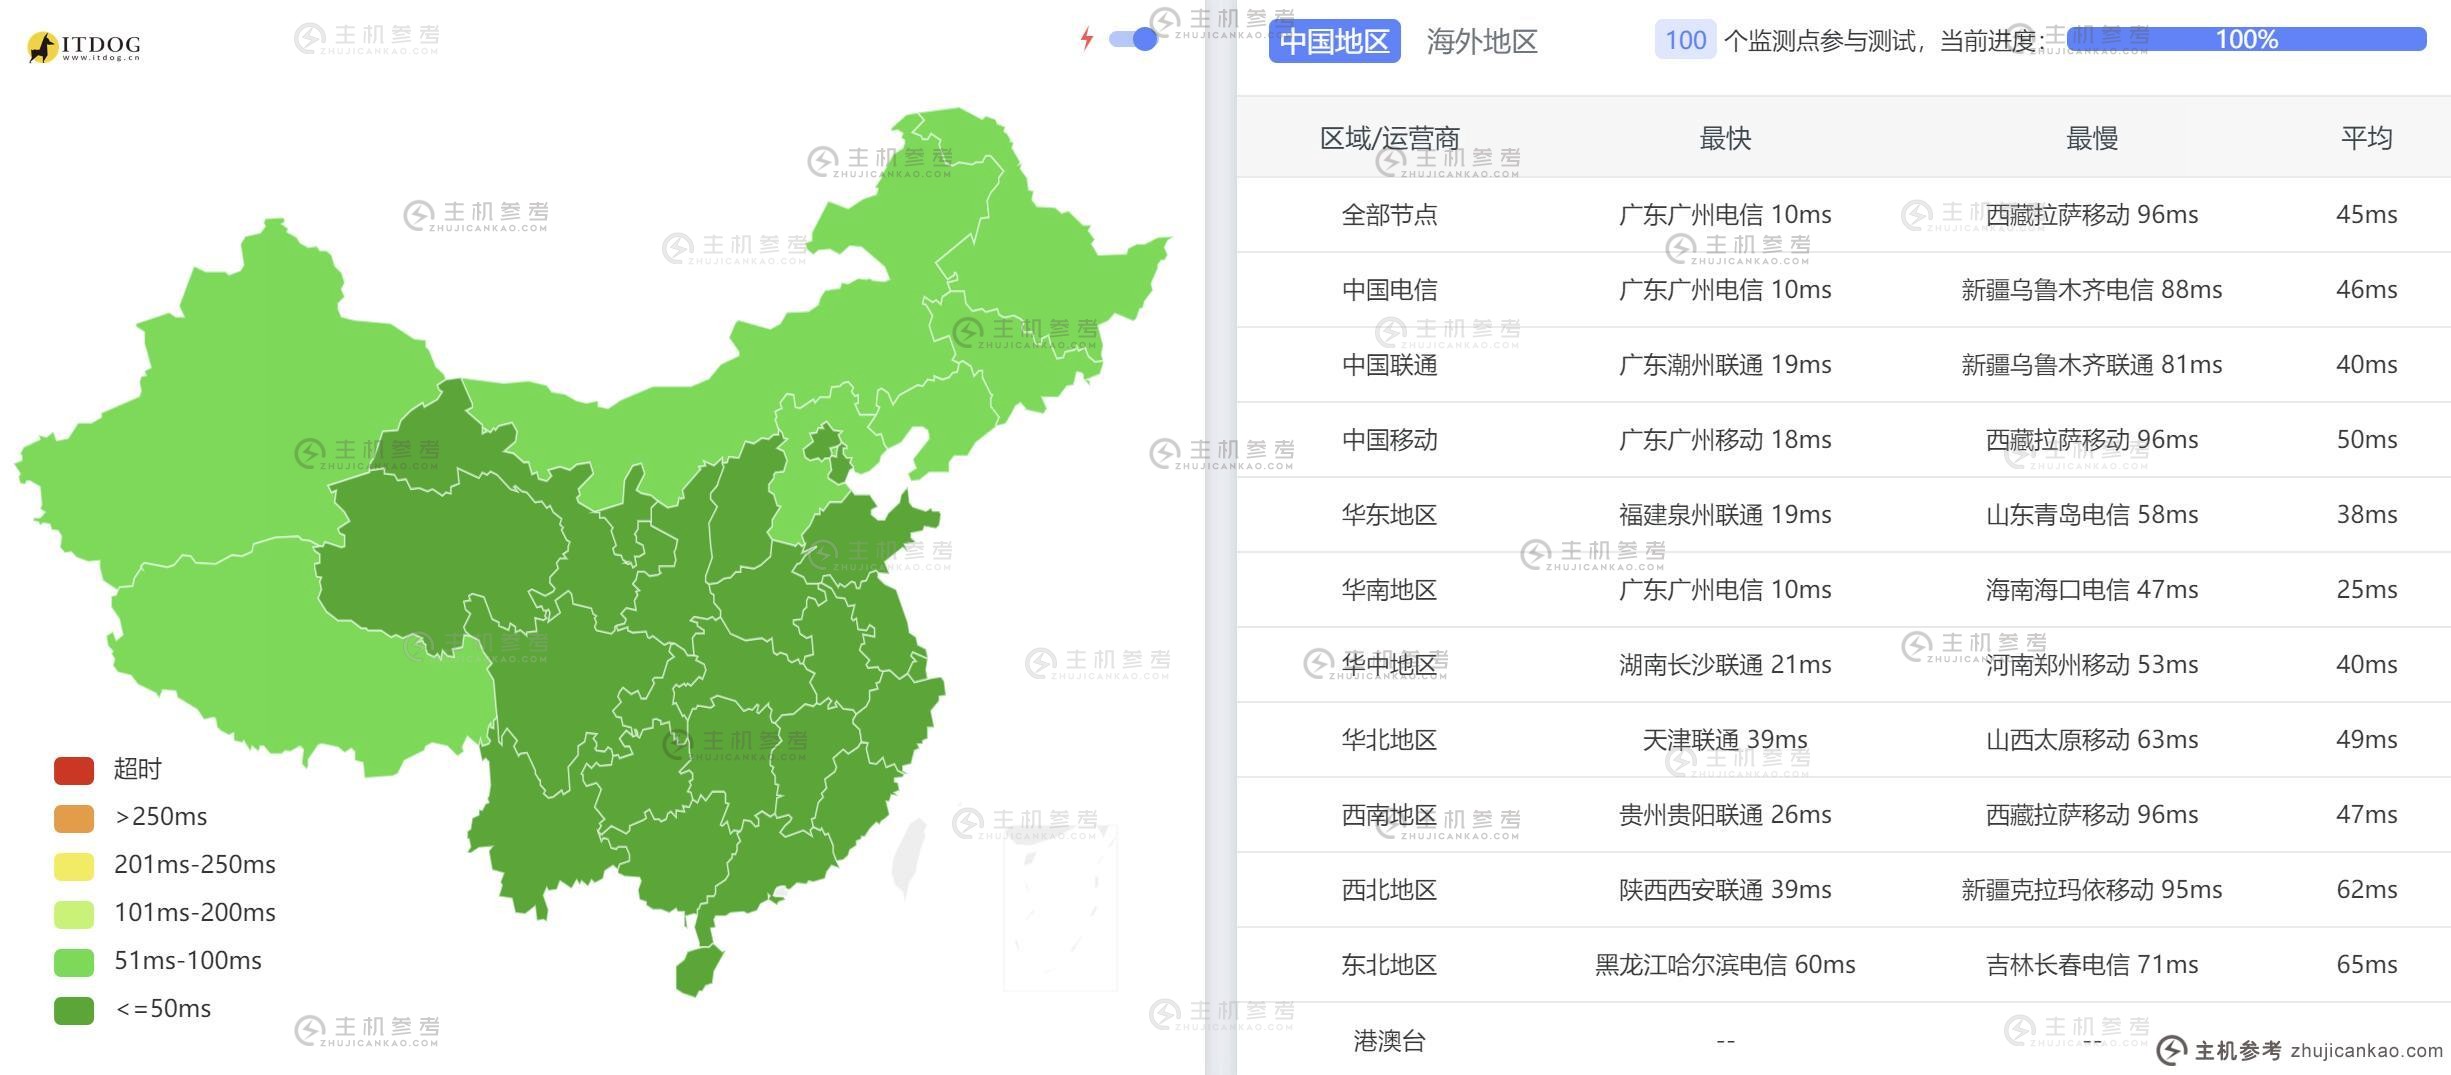 HostXen香港VPS测评 - 全国三网Ping平均延迟测试